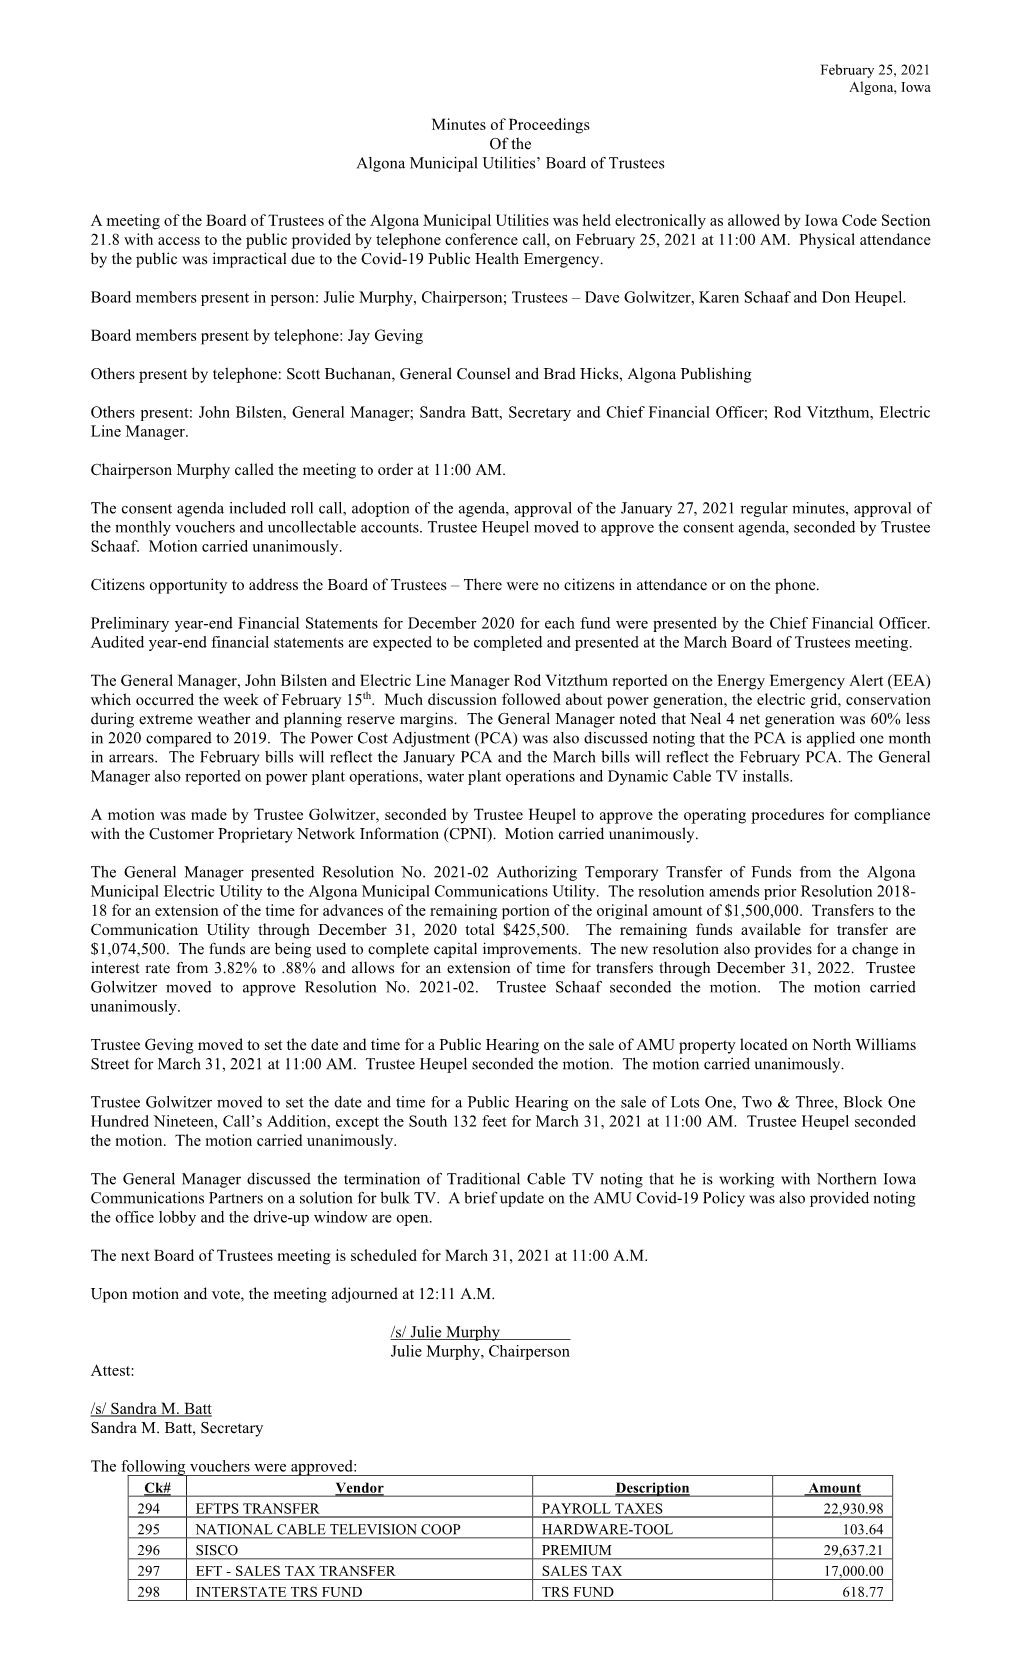 Minutes of Proceedings of the Algona Municipal Utilities’ Board of Trustees